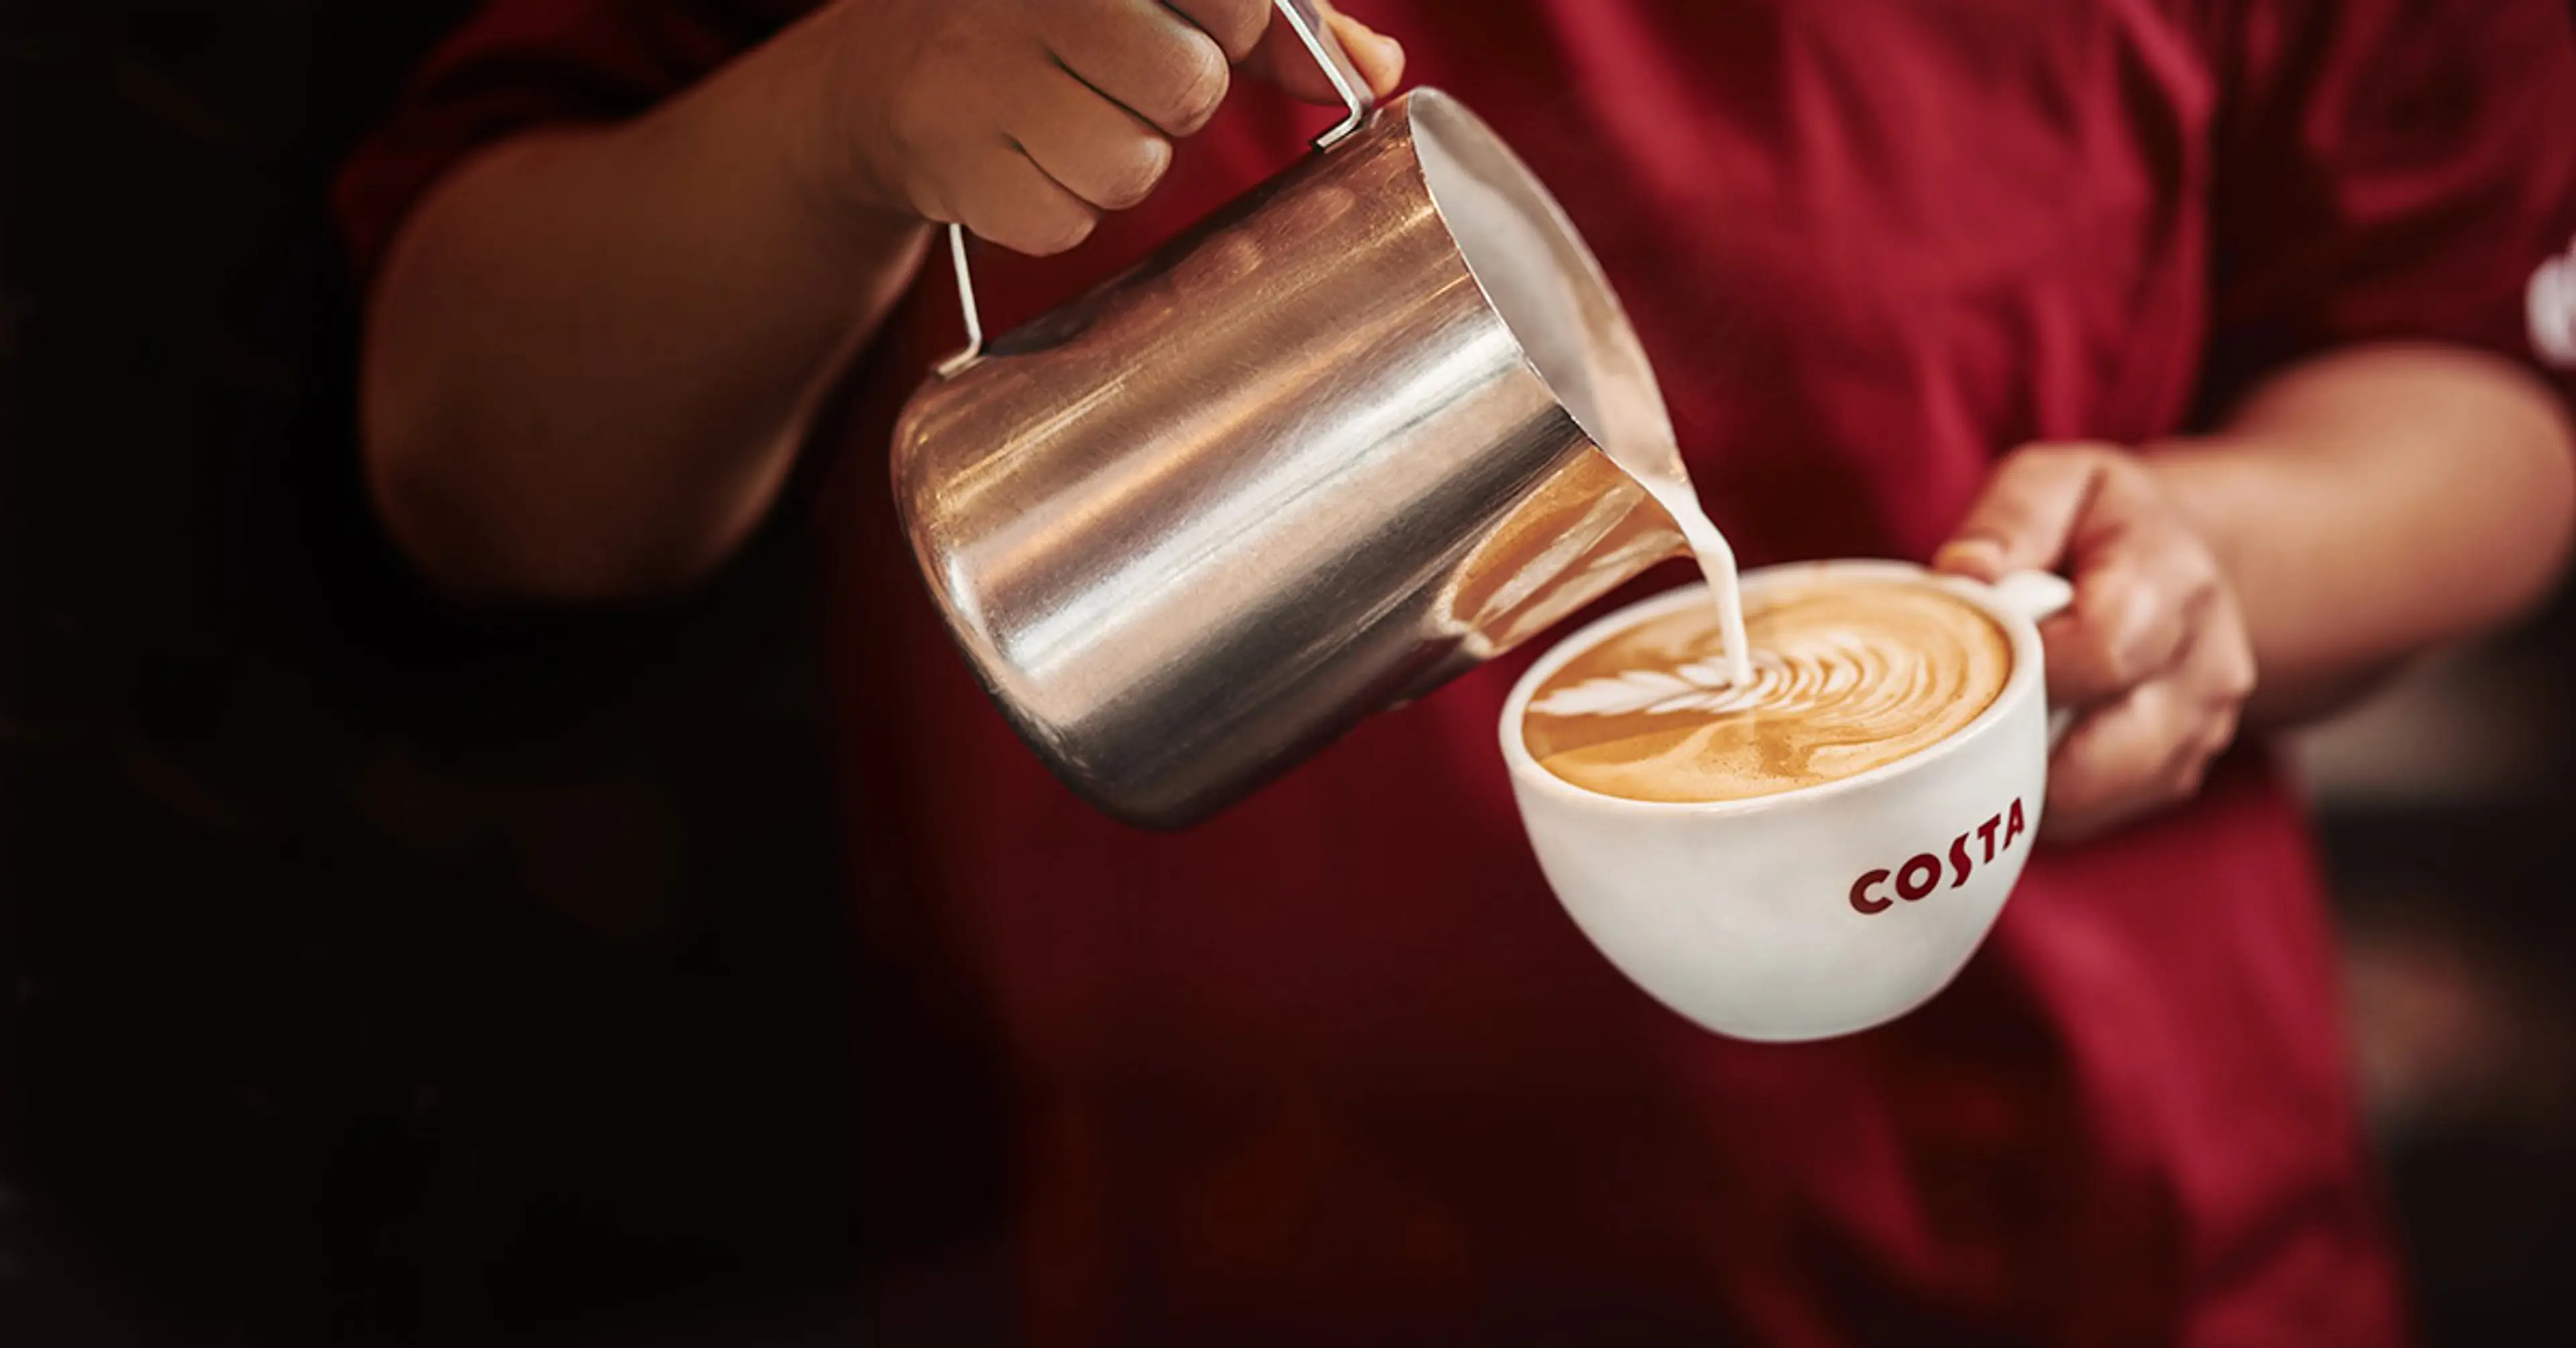 Costa kaffe